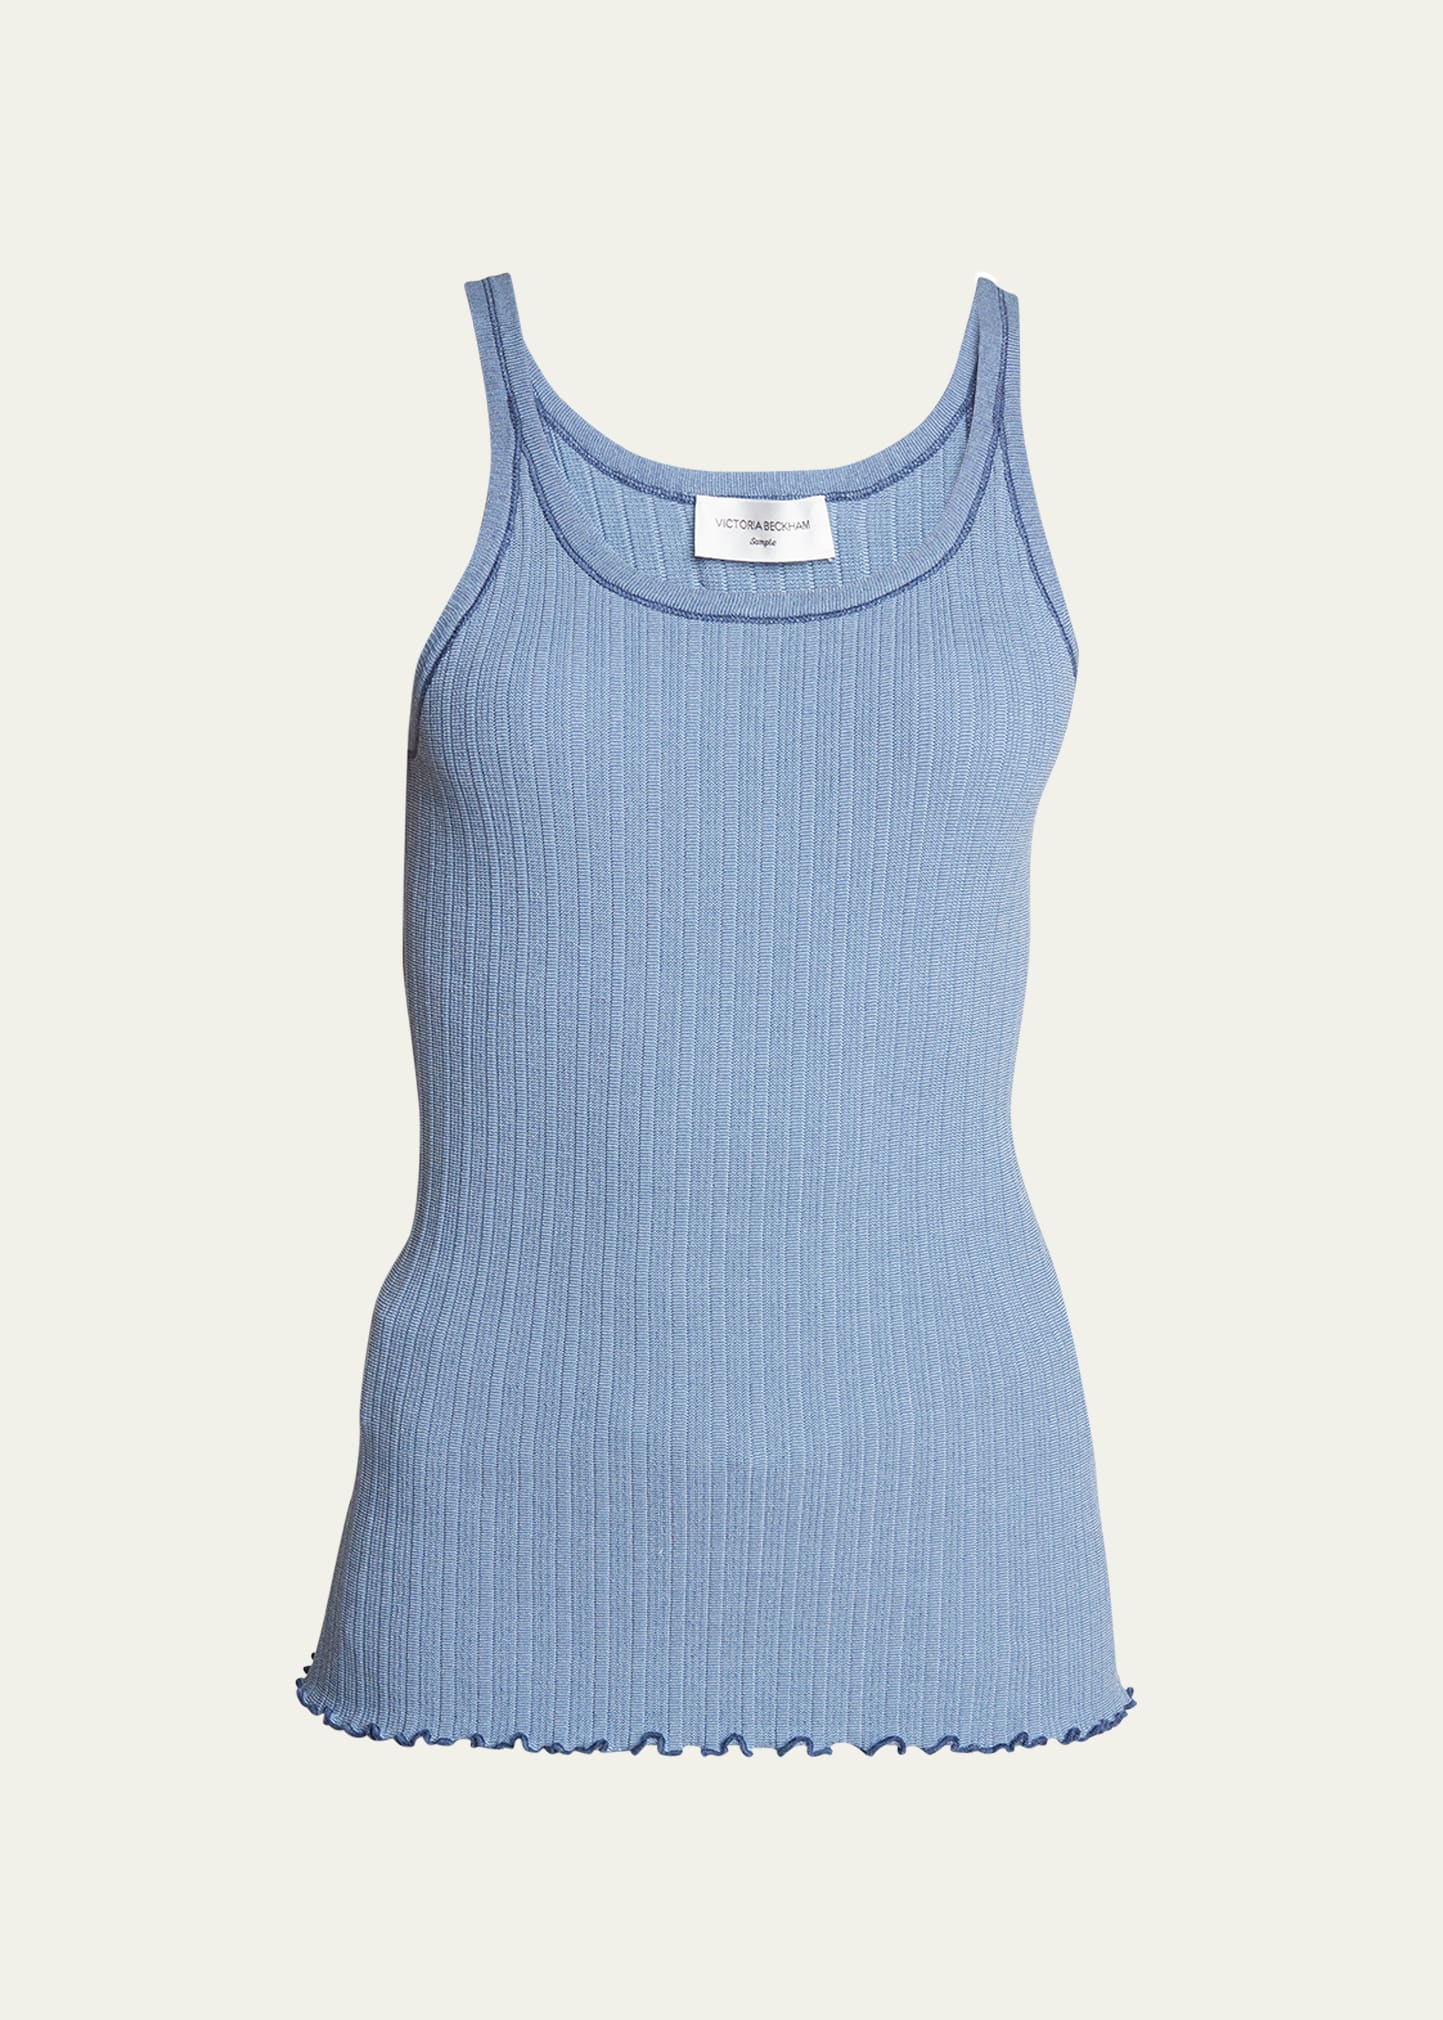 Victoria Beckham Fine Knit Tank Top In Heritageblue/blue